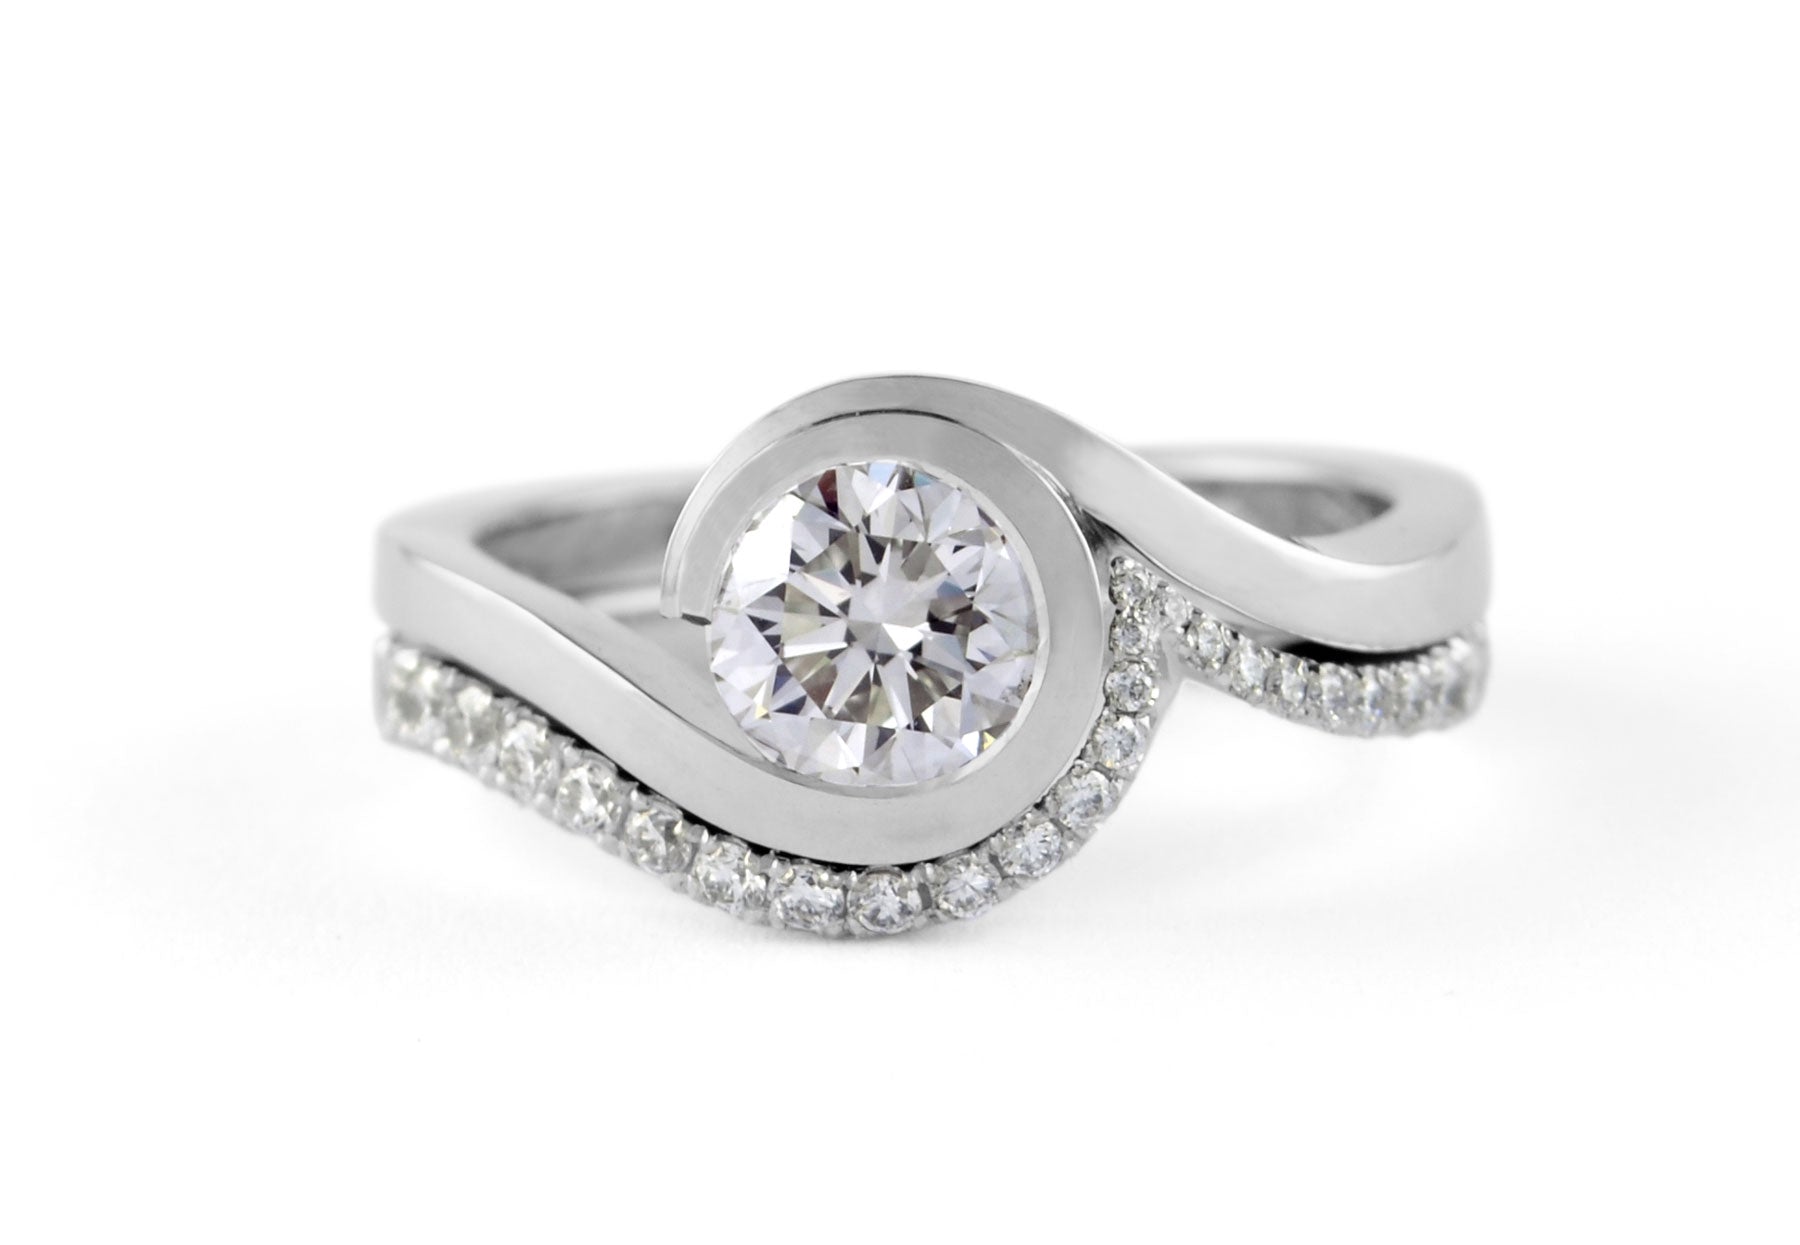 White diamond and platinum wave engagement ring and wedding ring set